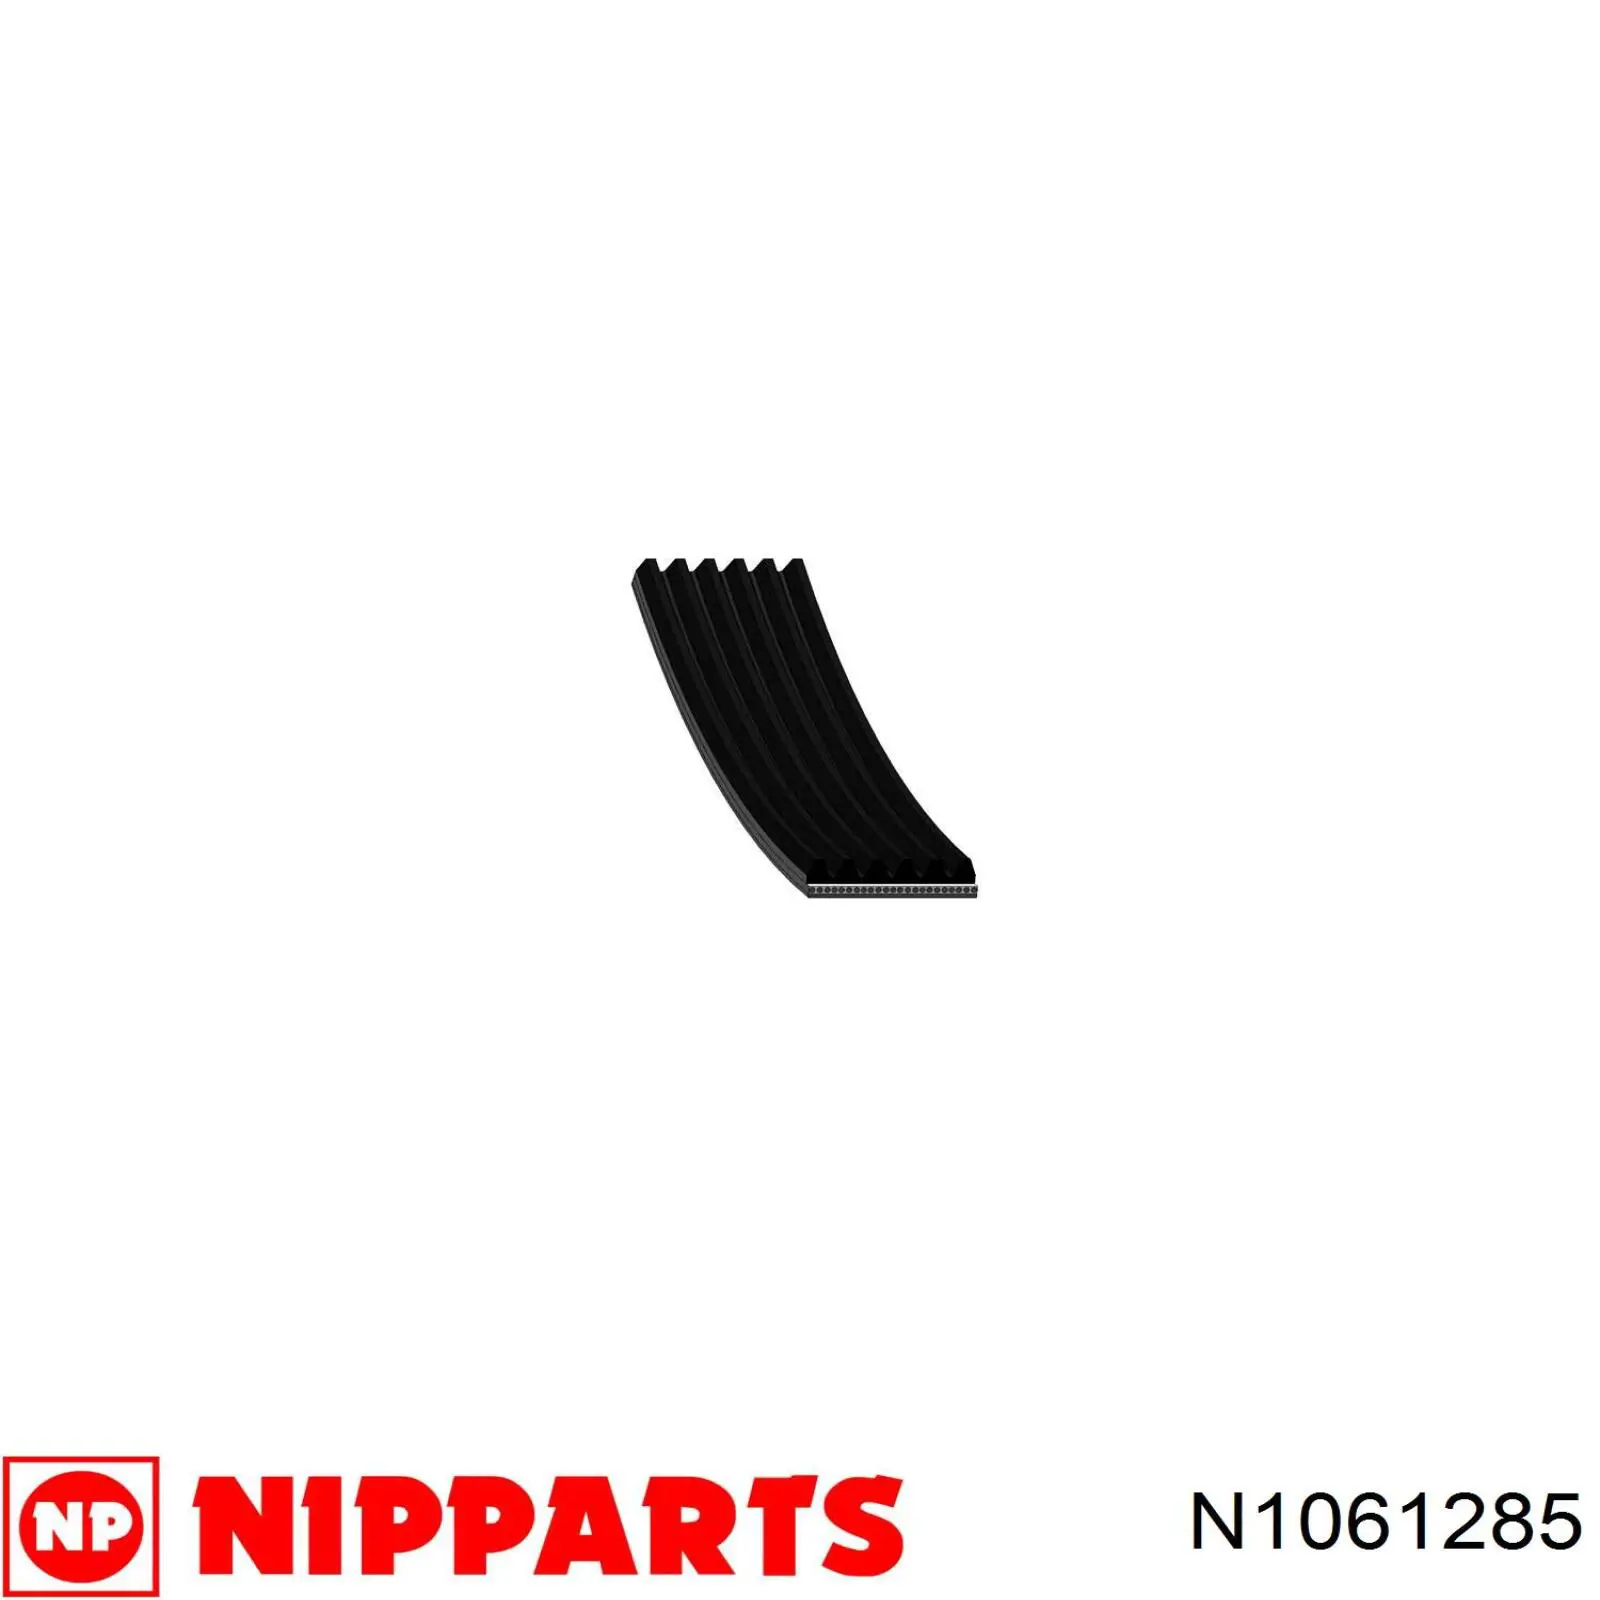 N1061285 Nipparts correa trapezoidal